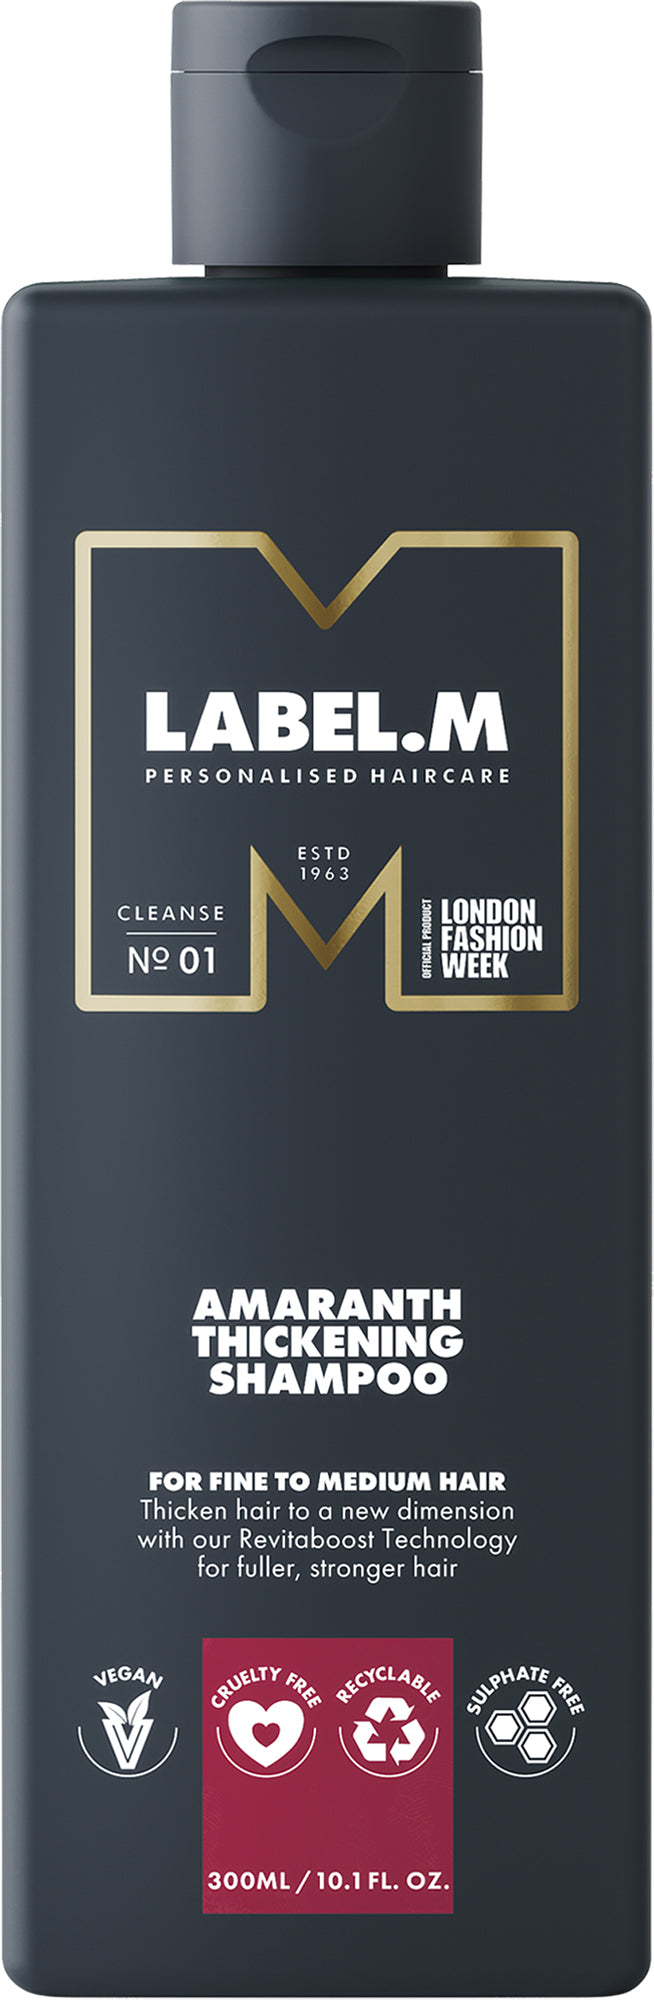 Label.m Amaranth tankinantis šampūnas 1000 ml